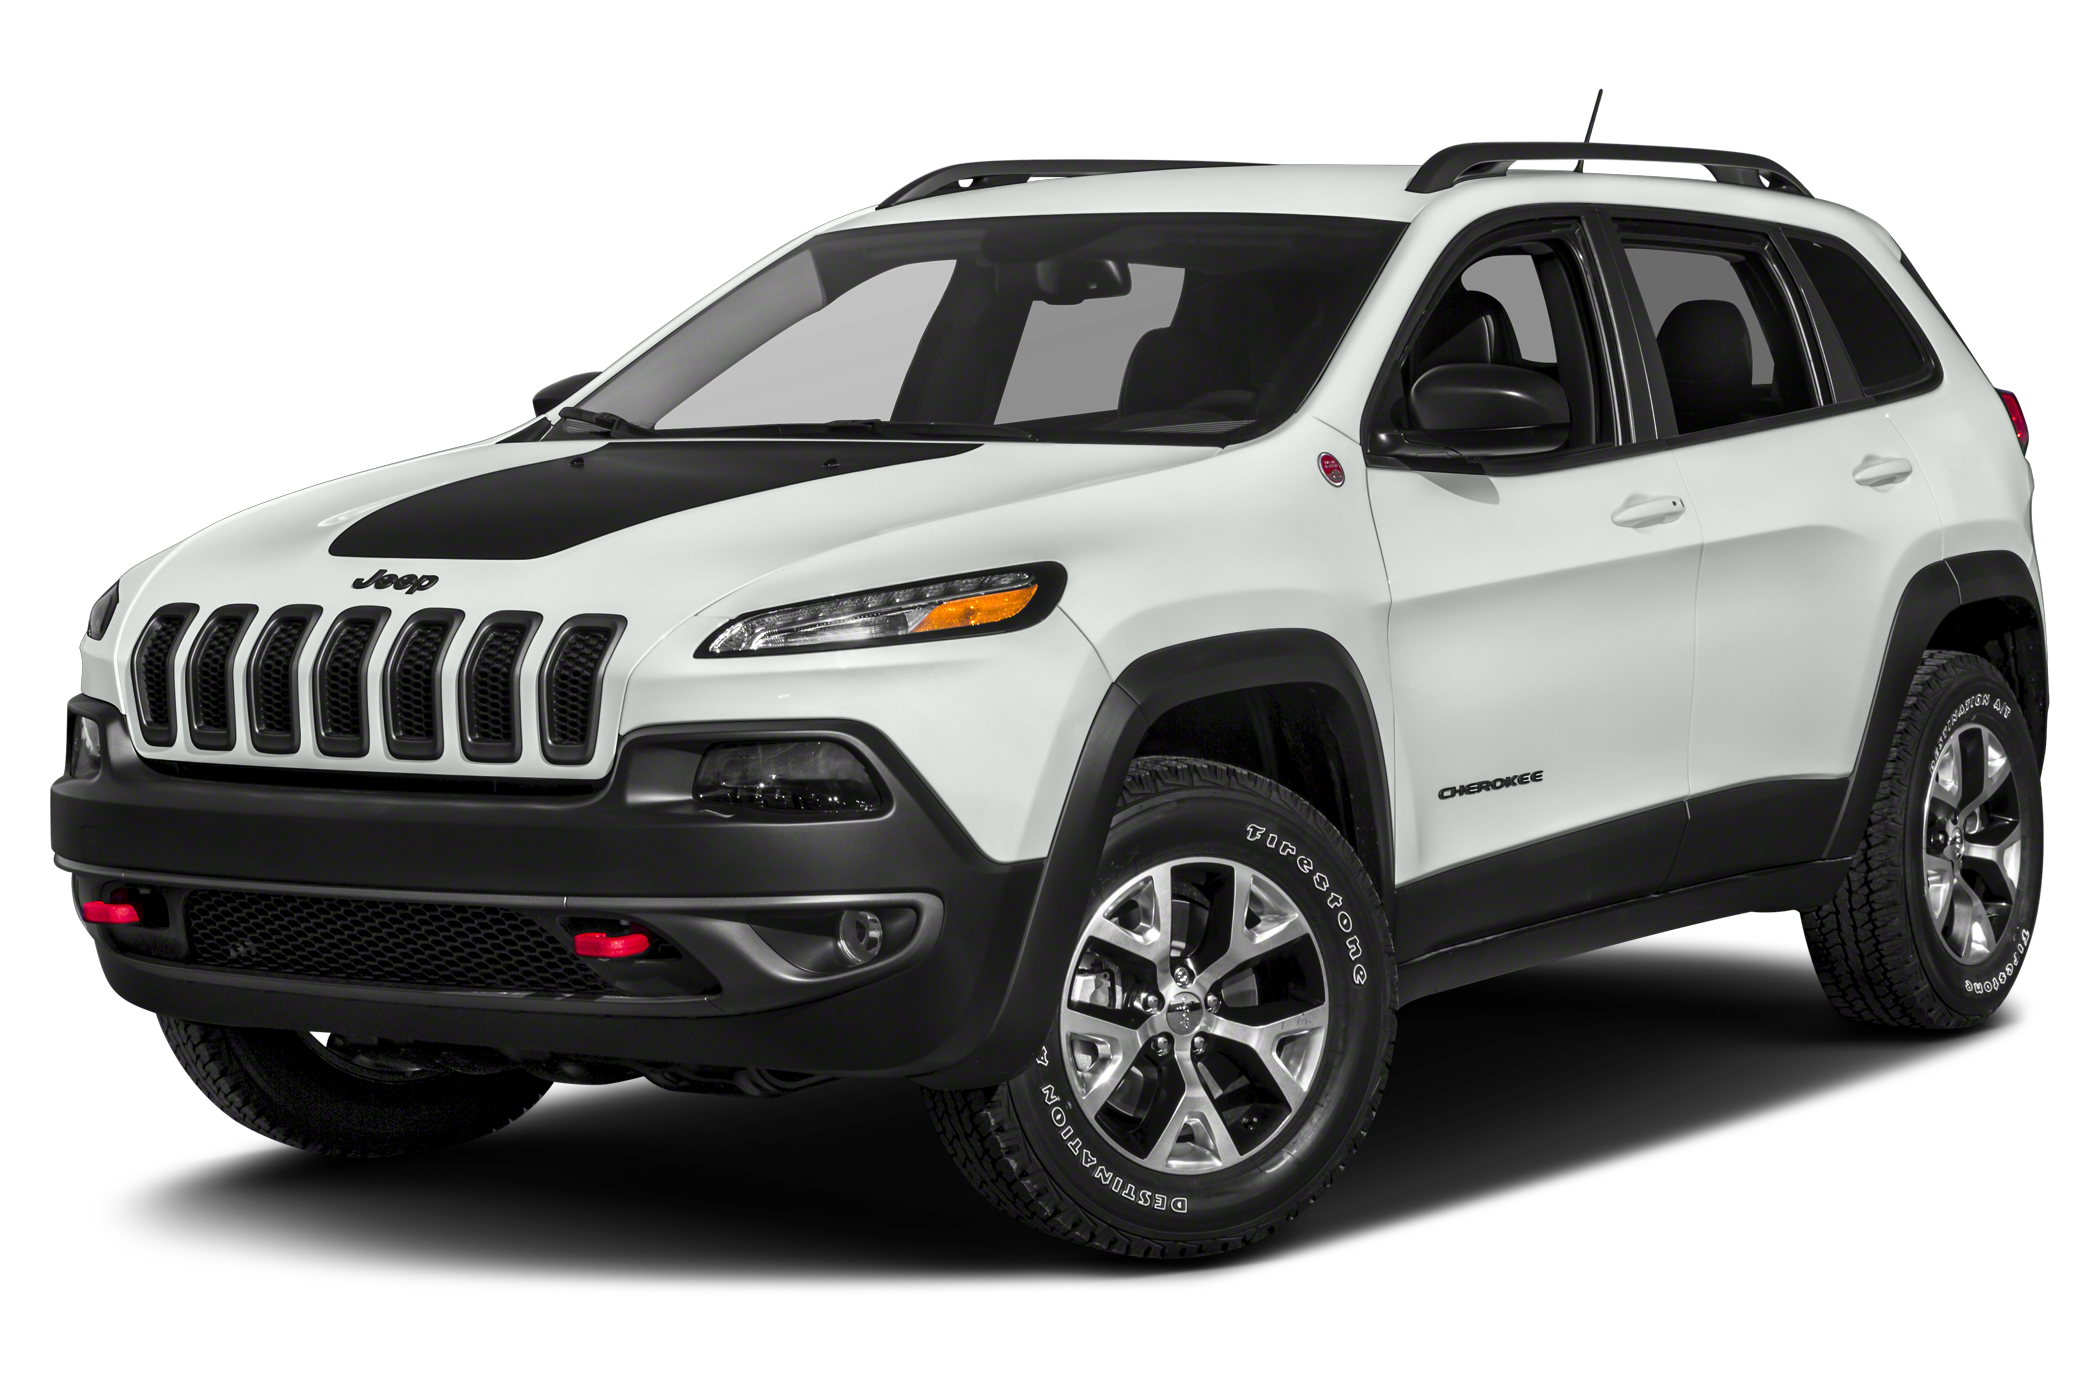 Used 2018 Jeep Cherokee for Sale Near Me | Cars.com